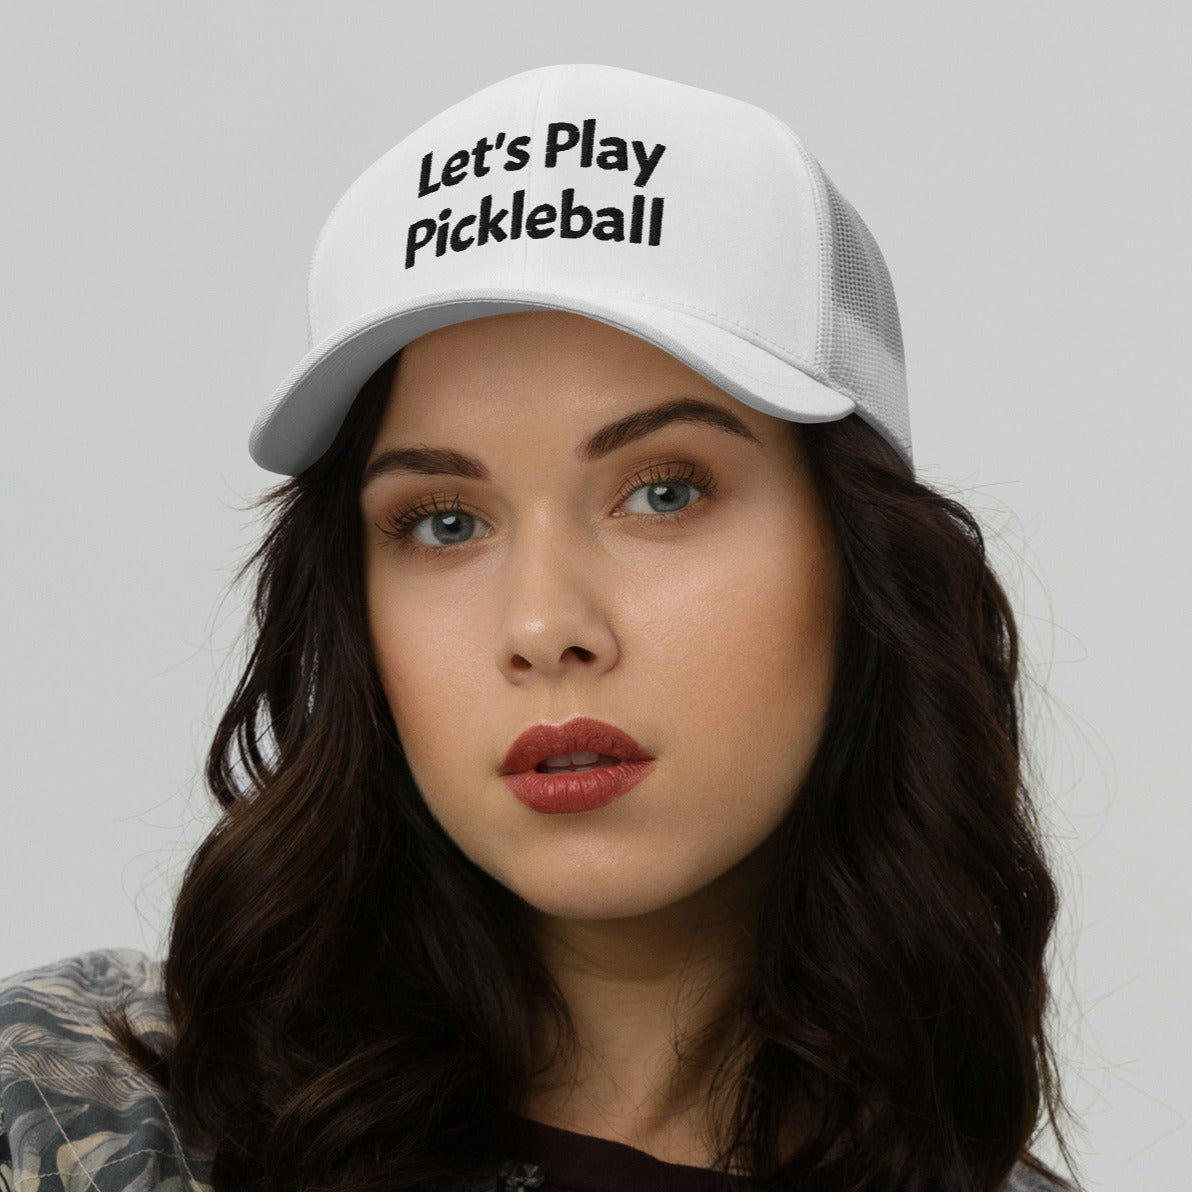 White Let's Play Pickleball Hat | Embroidered | Mesh Back